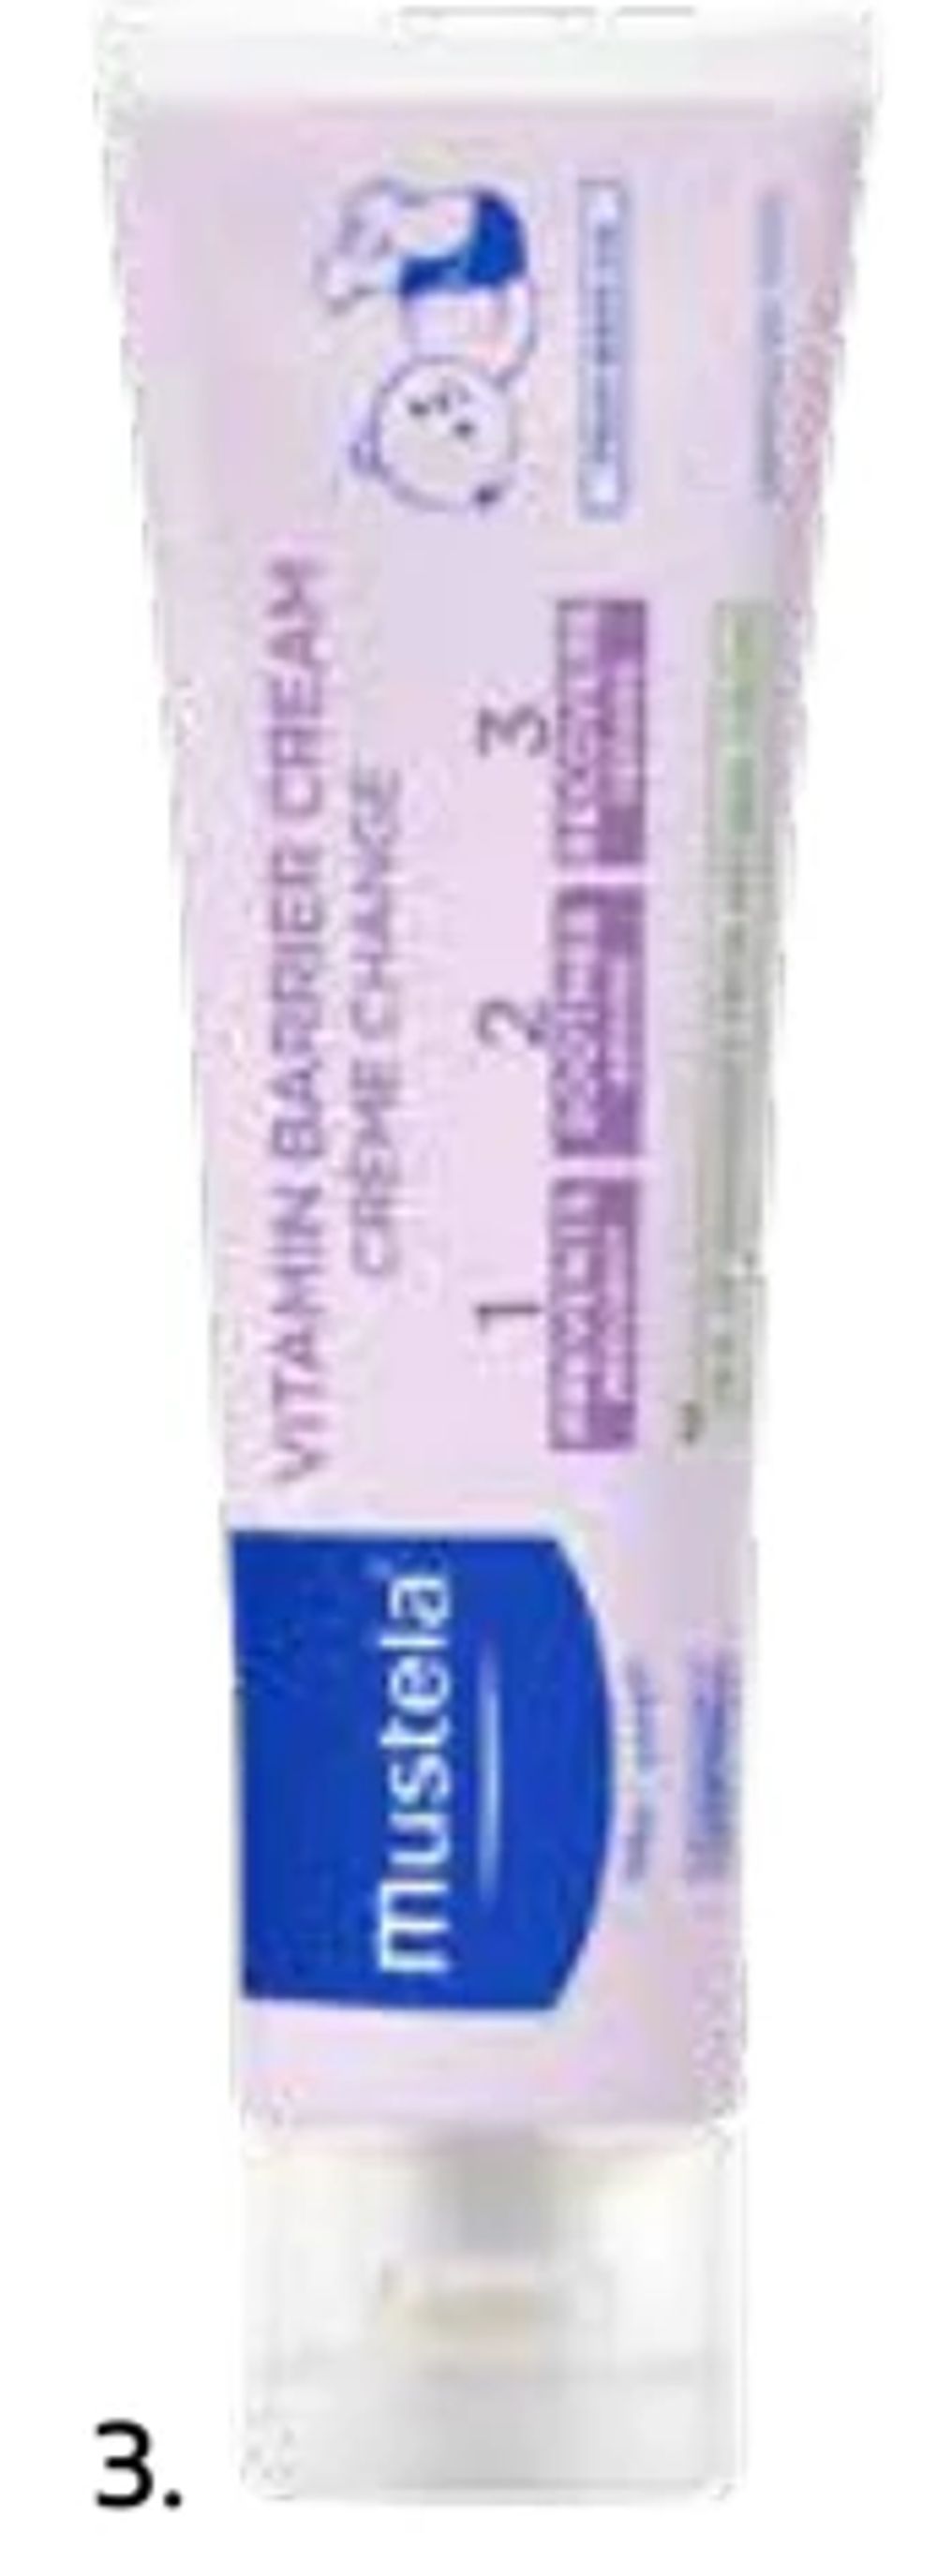 Tilbud på Mustela Vitamin Barrier Cream barriere krem fra Apotek 1 til 84 kr